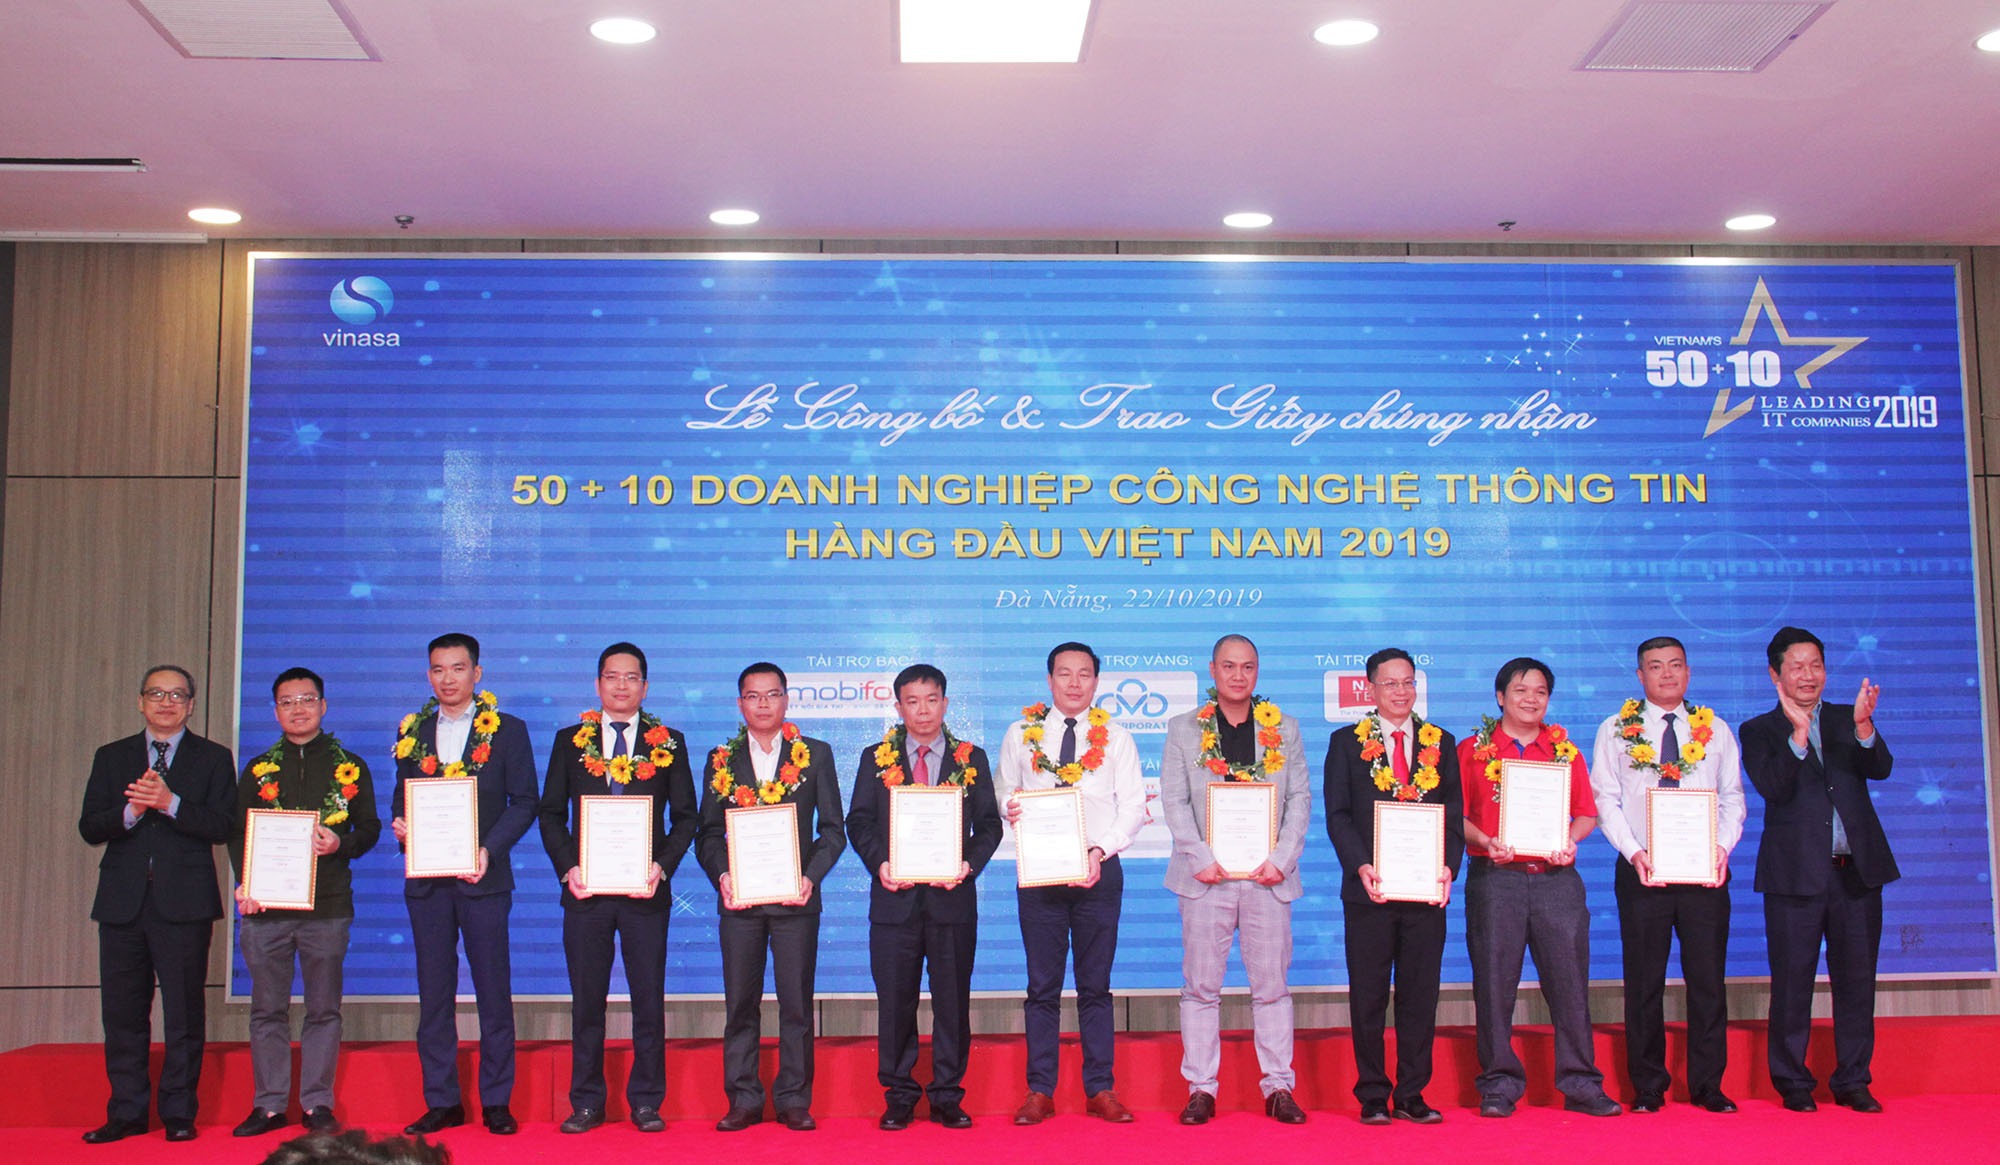 Vietnam’s 50+10 Leading Information Technology Companies 2019